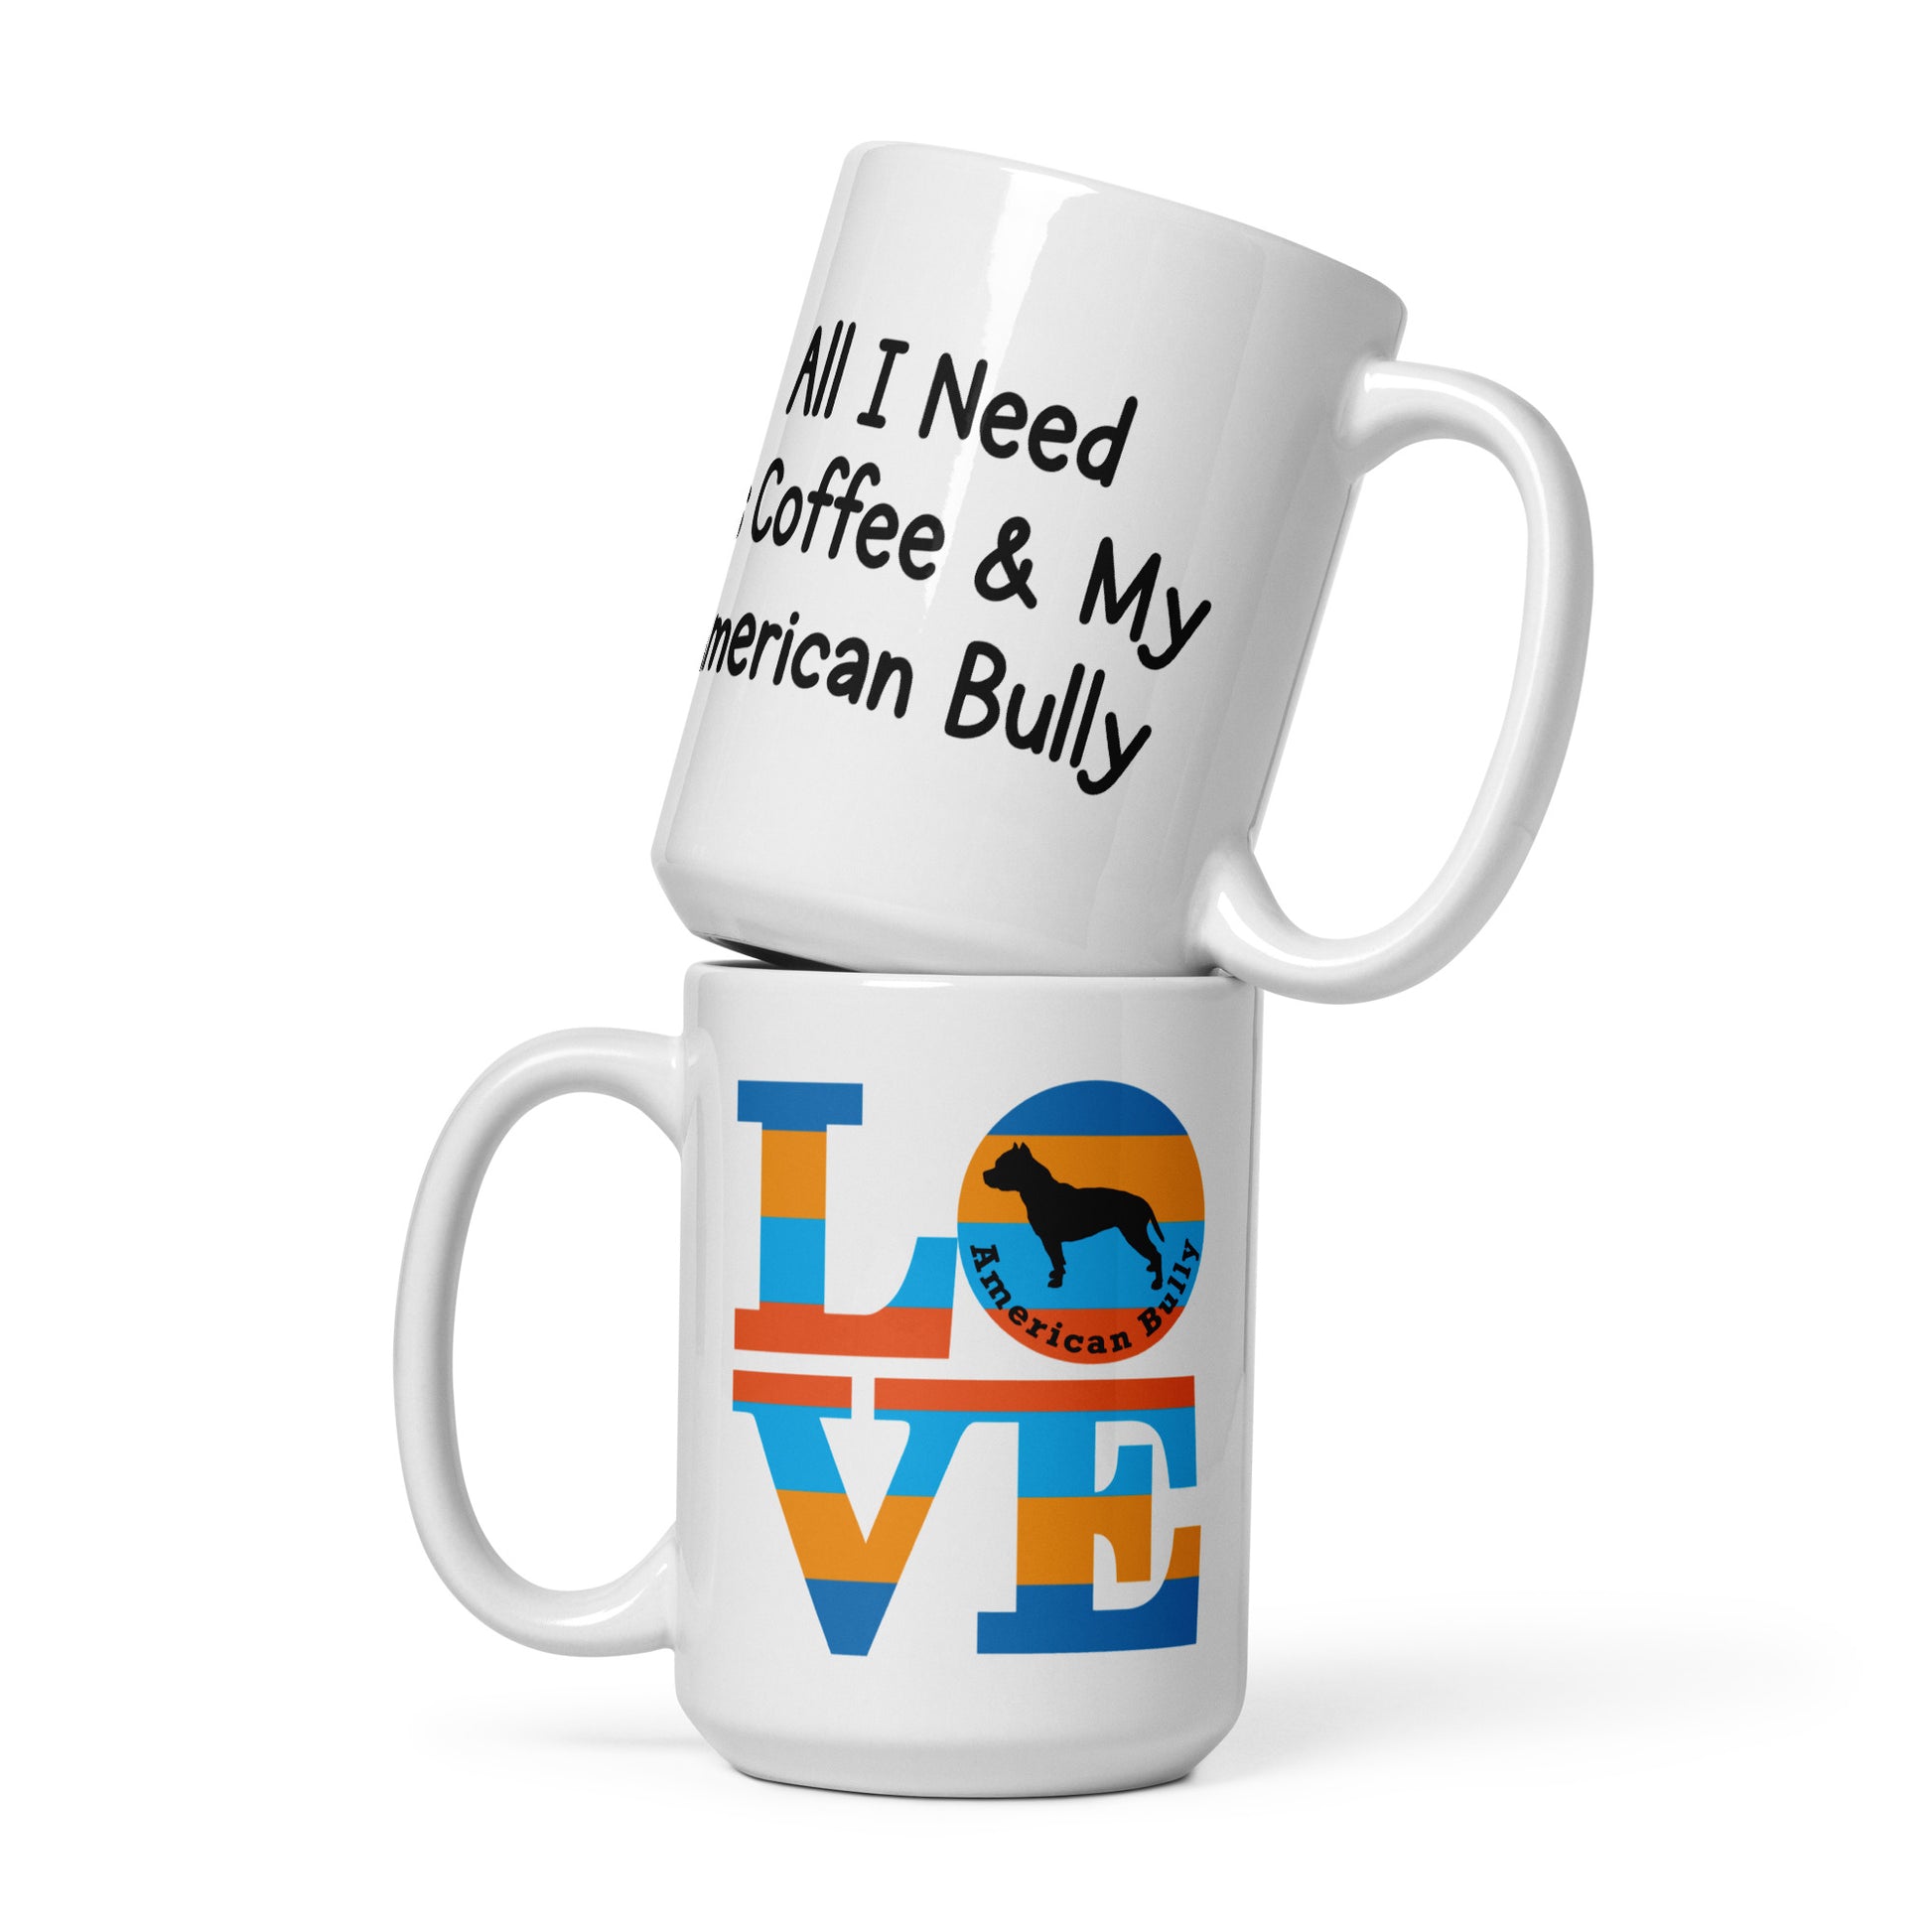 All I need is coffee & my American Bully mug by Dog Artistry.